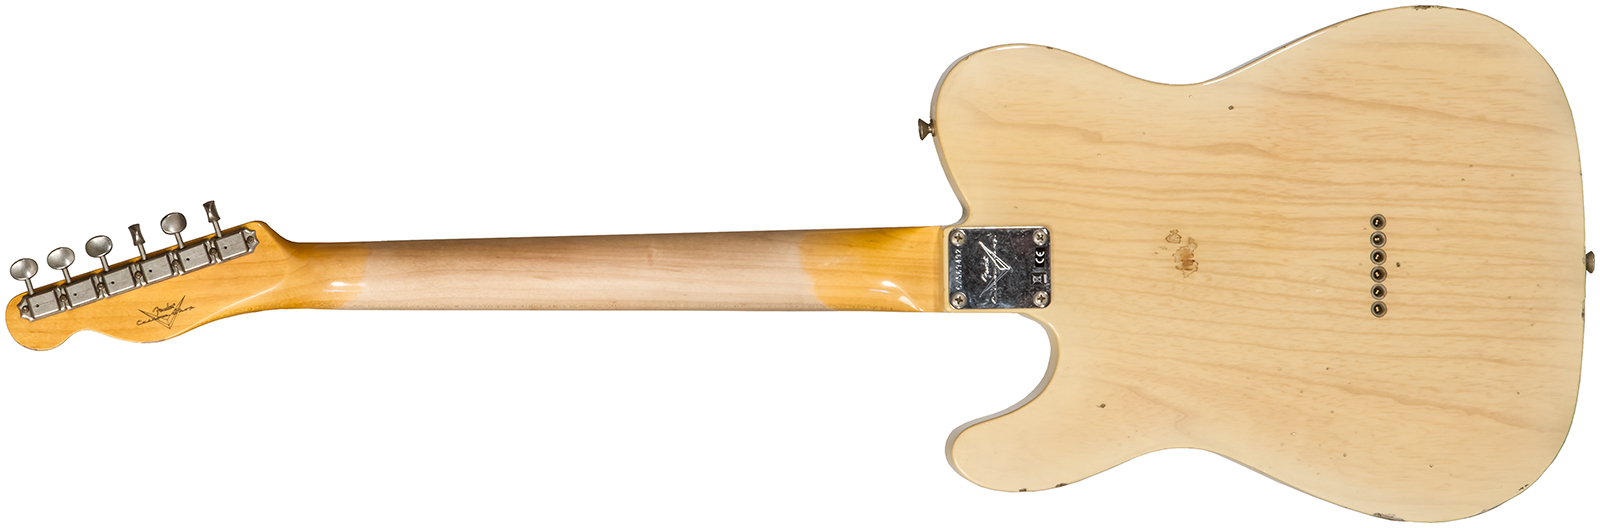 Fender Custom Shop Tele 1960 2s Ht Rw #cz569492 - Relic Natural Blonde - Guitarra eléctrica con forma de tel - Variation 1